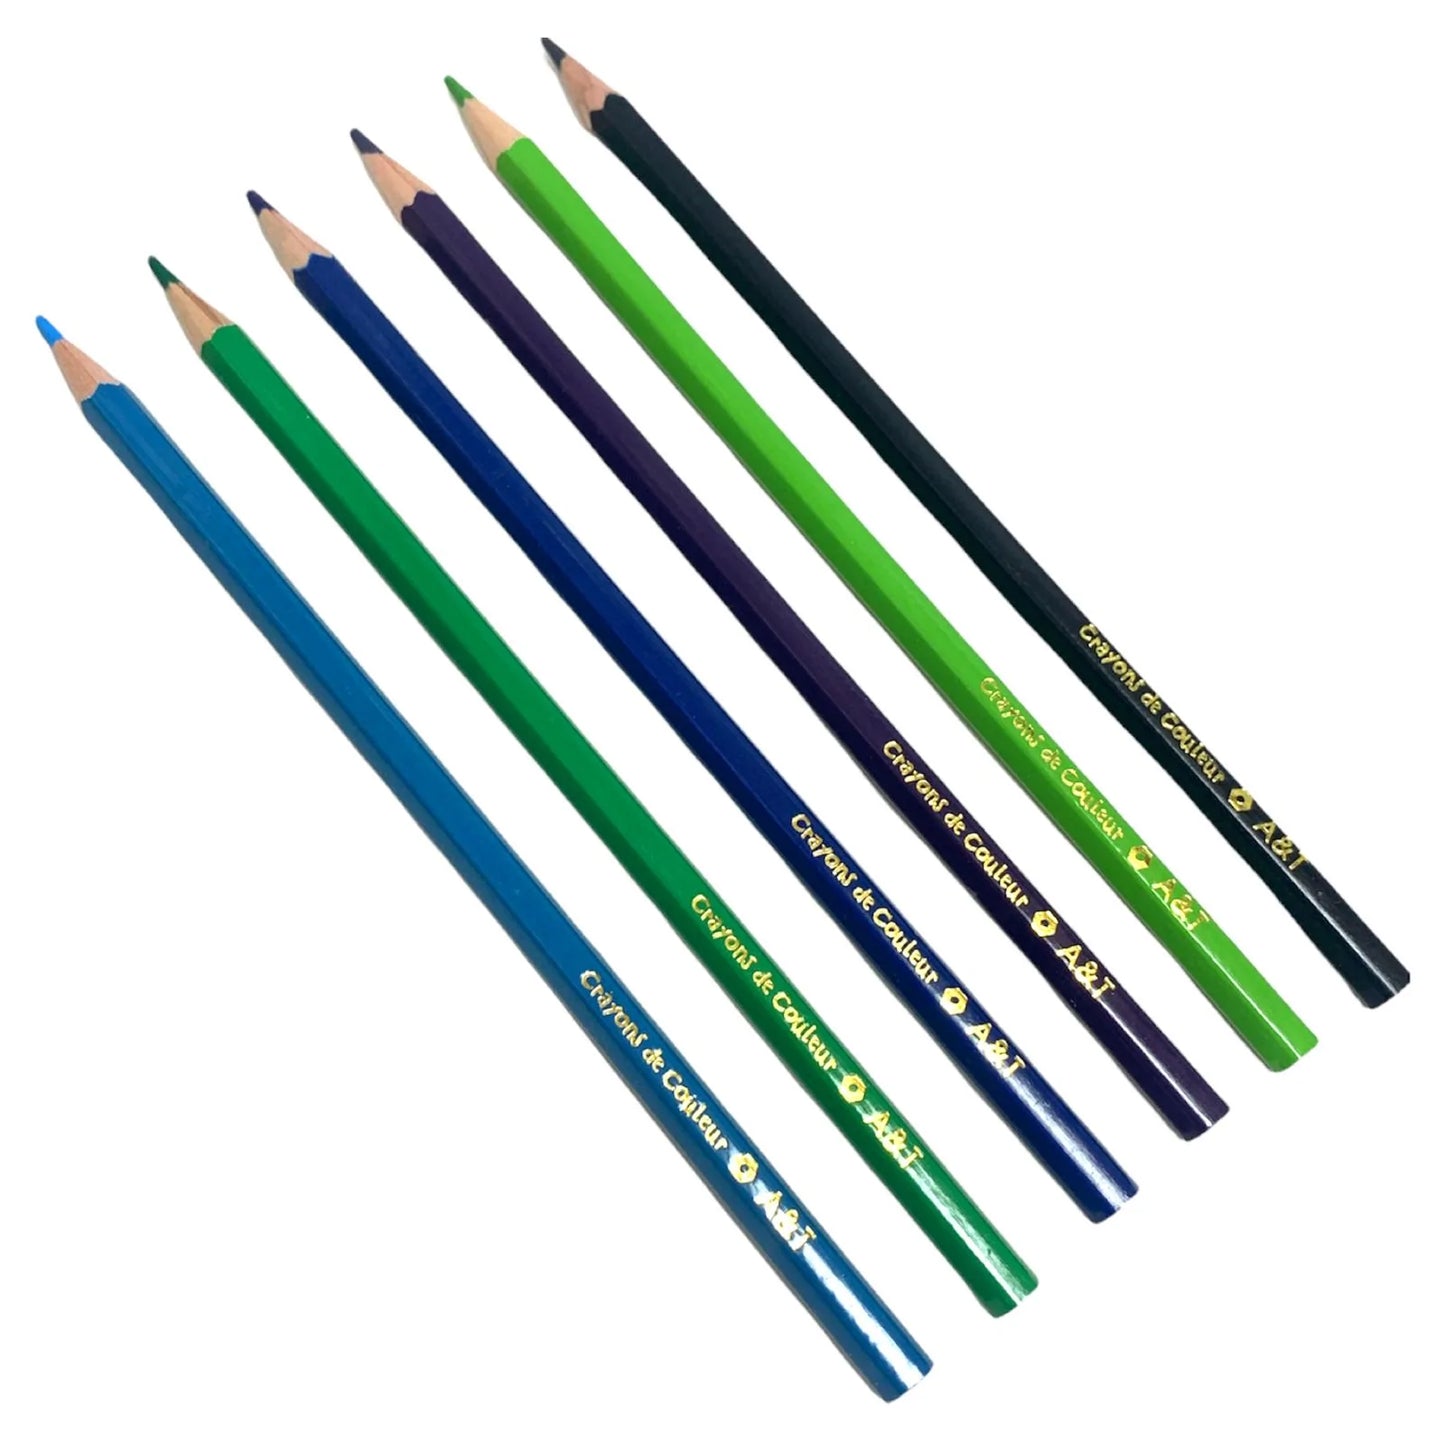 A&T Color Me Colored Pencils 12 Colors || الوان خشبية كولور مي⁩ ١٢ لون